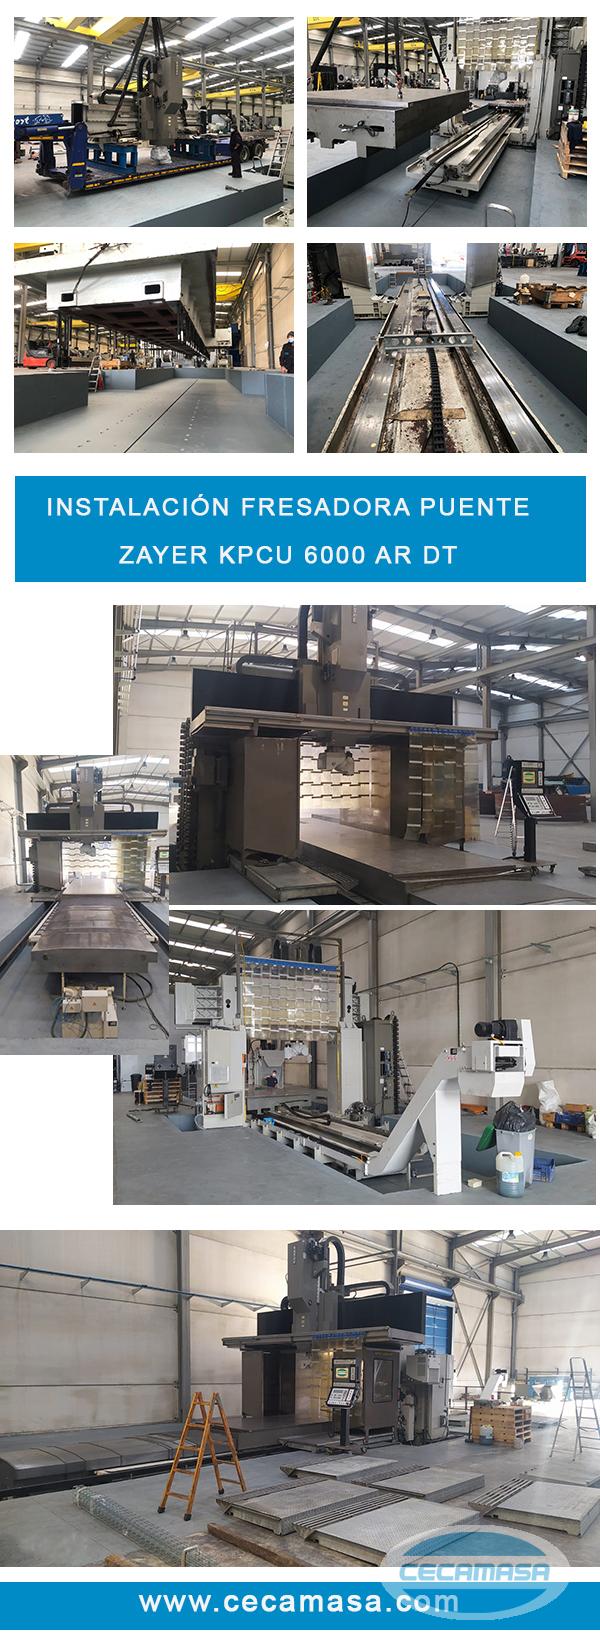 Installation of the Zayer bridge type milling machine